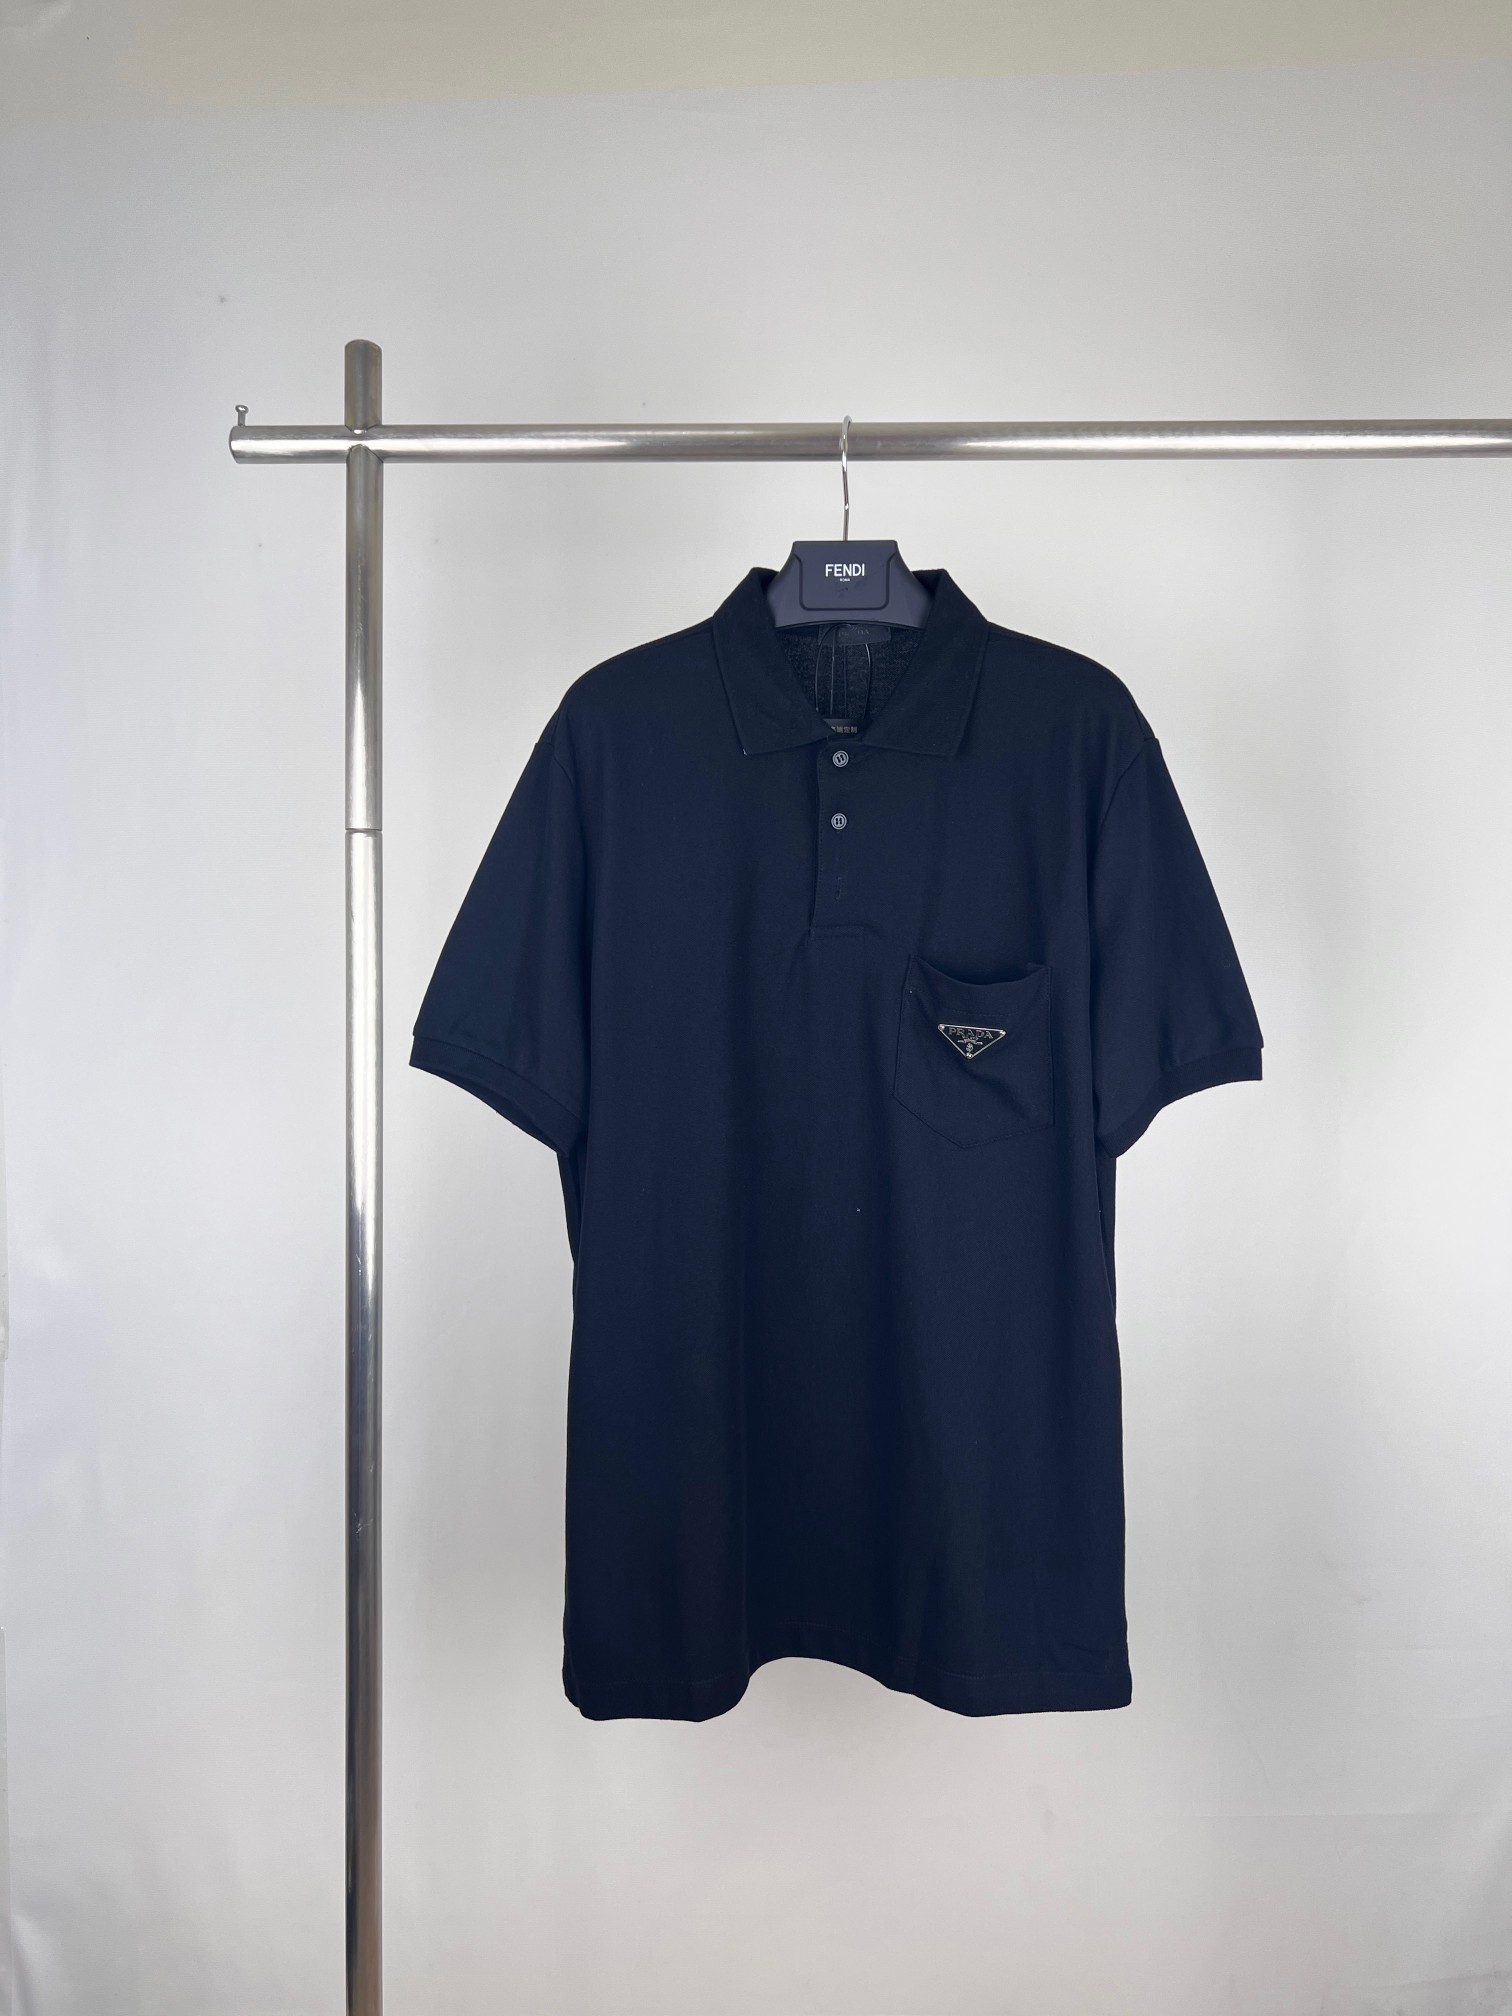 Prada Clothing Polo Shop the Best High Authentic Quality Replica